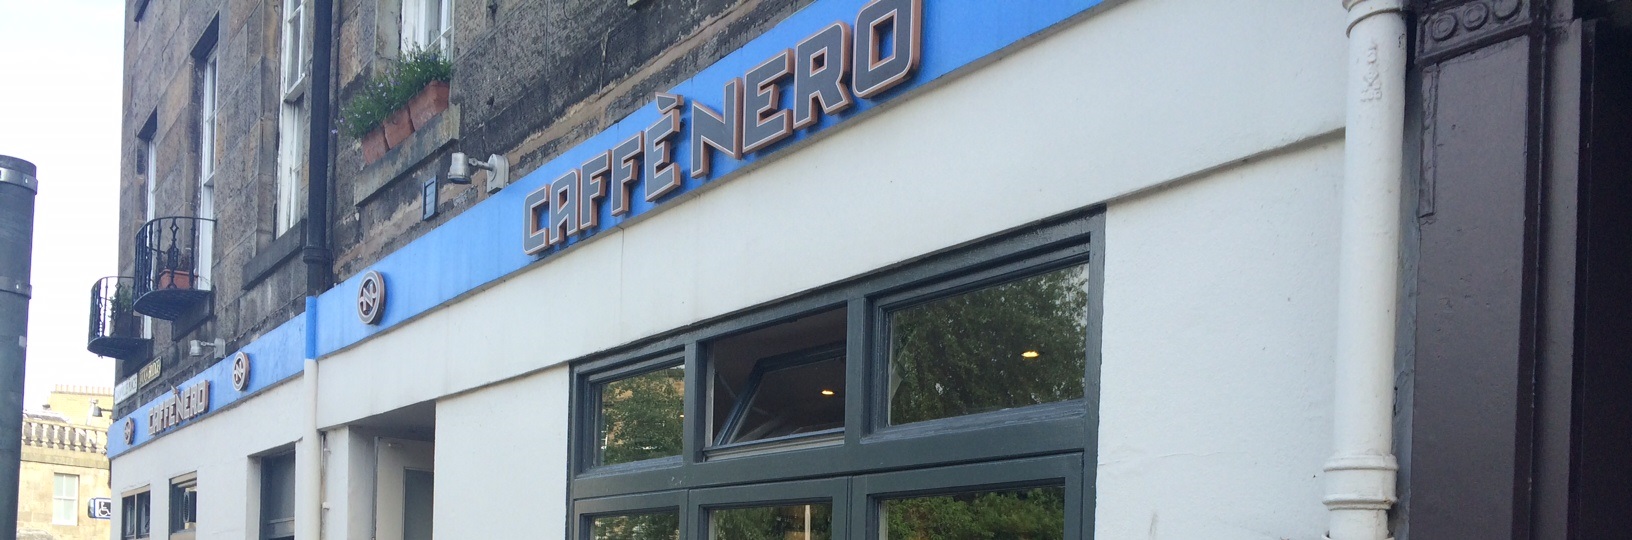 Picture of Caffe Nero - Stockbridge - Edinburgh